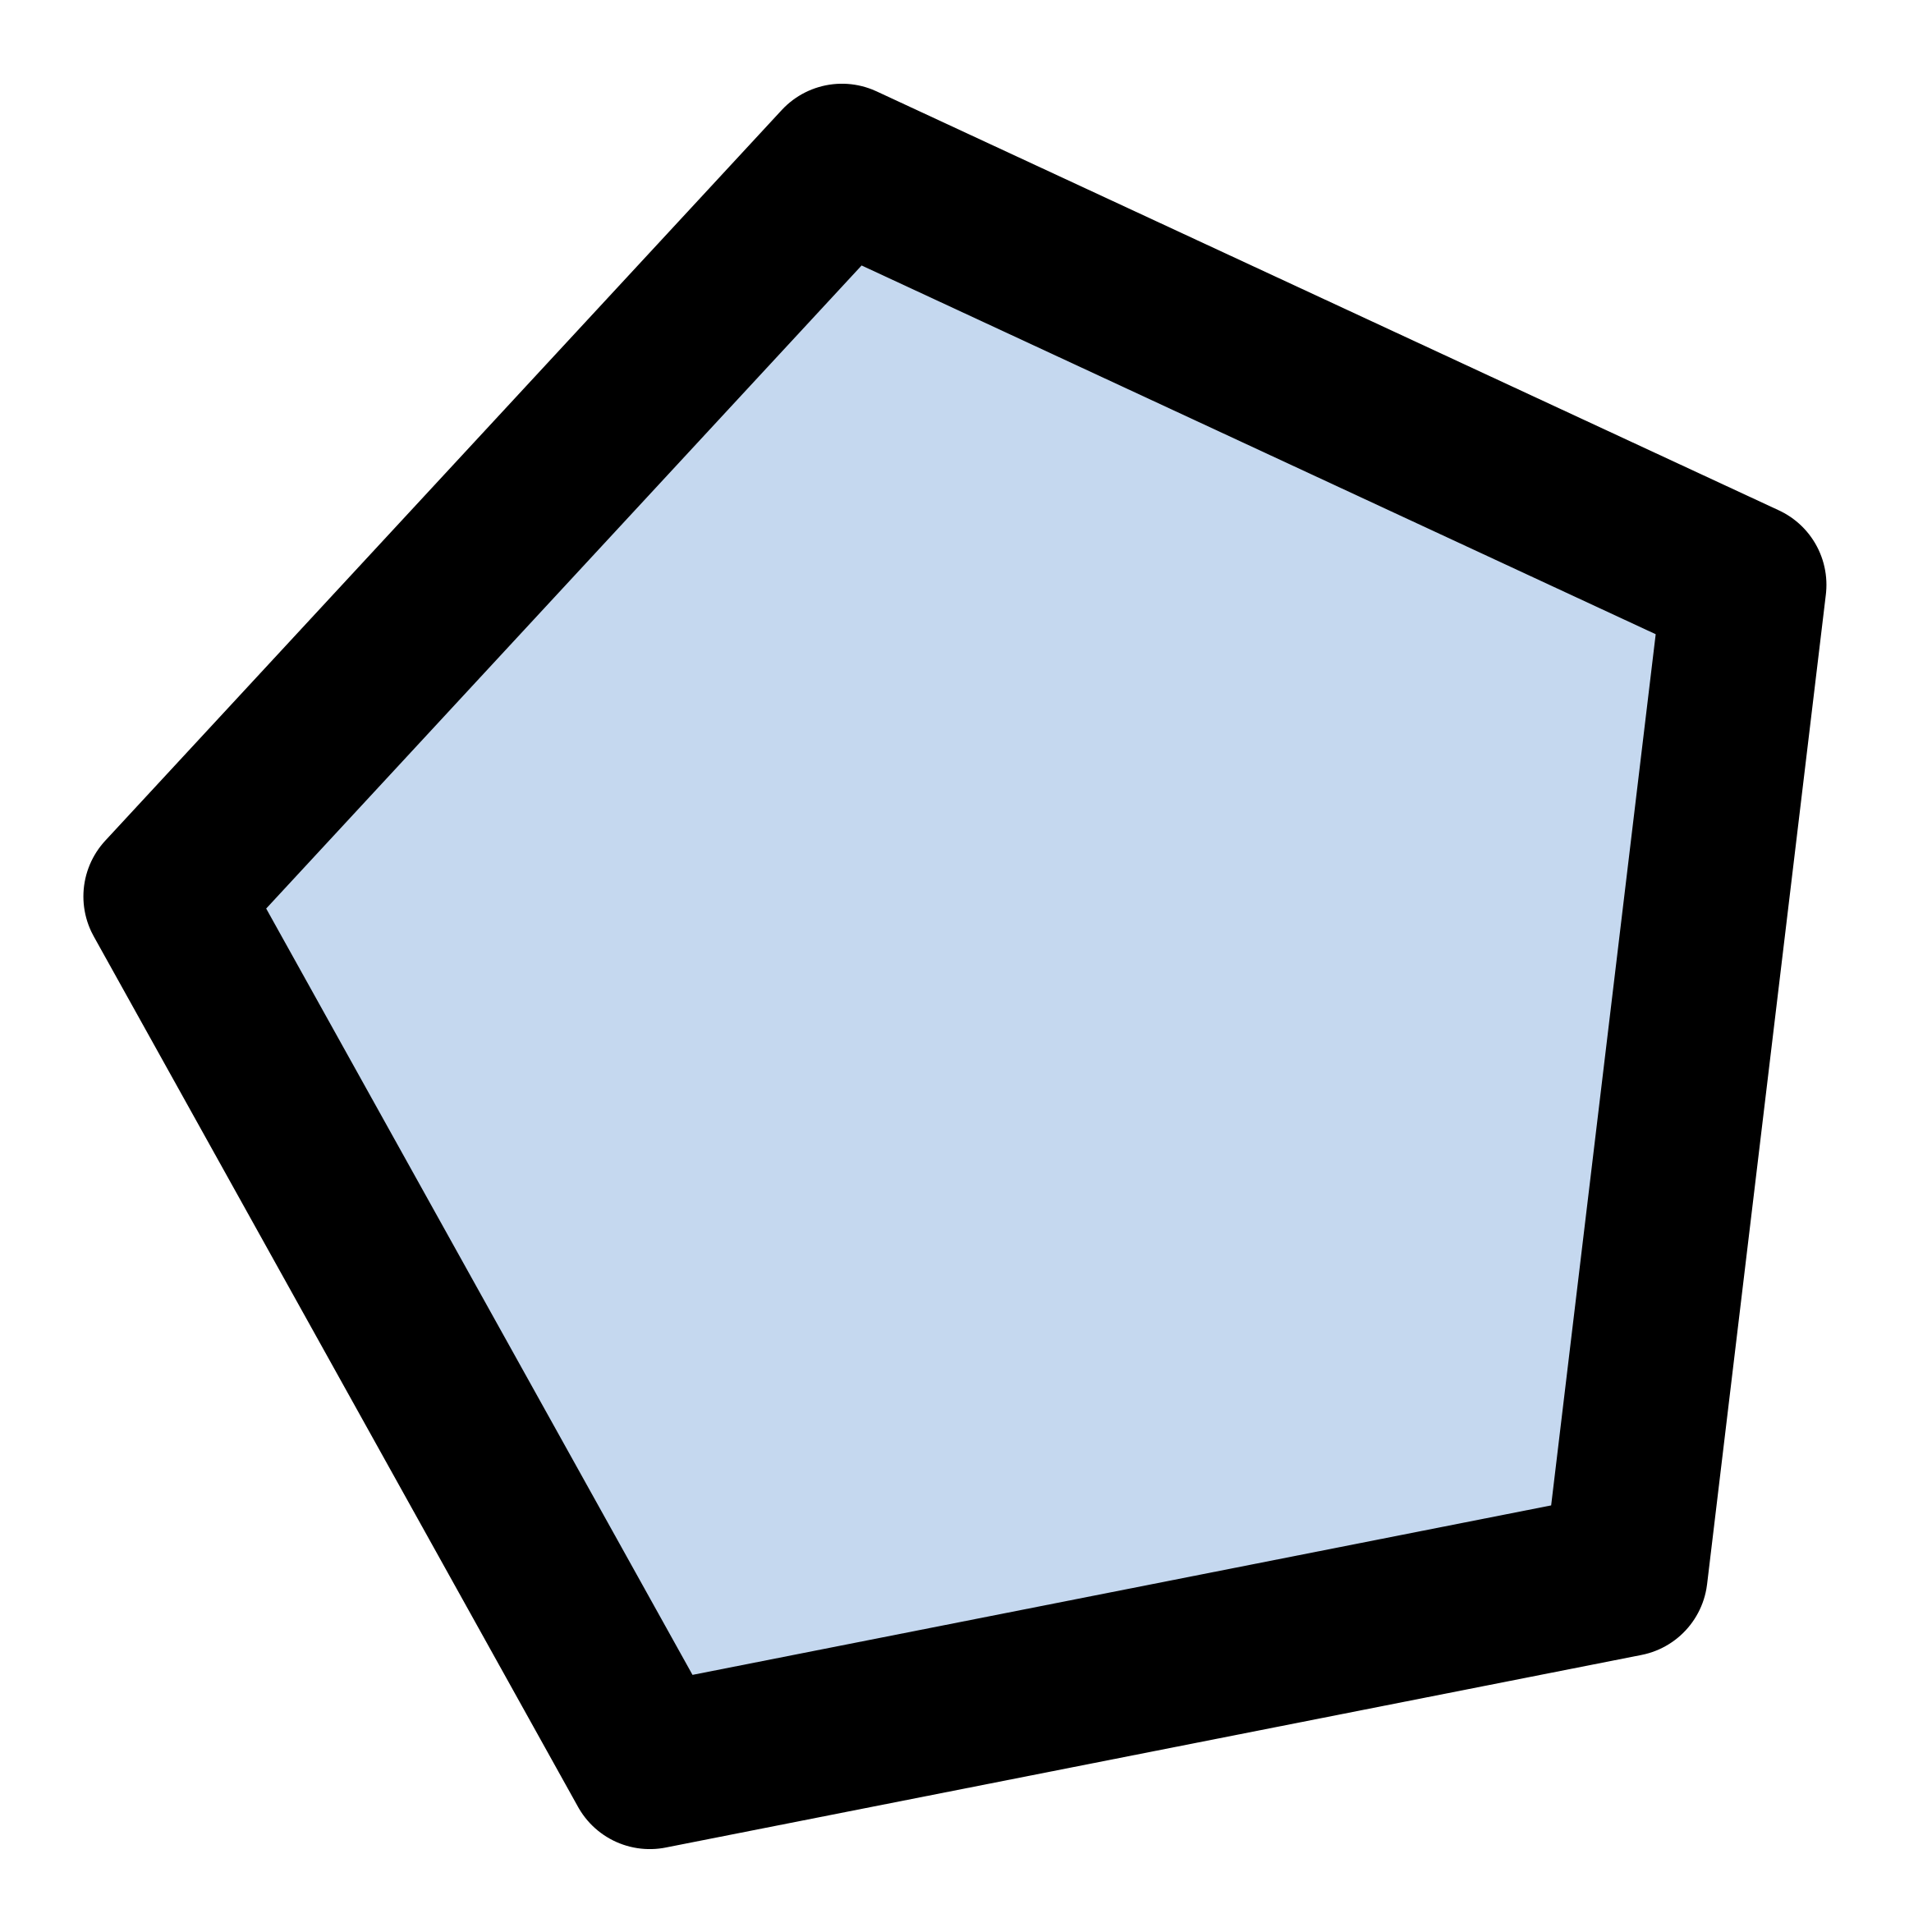 14 Polygon - Polygon Tool In Paint (2400x2400)